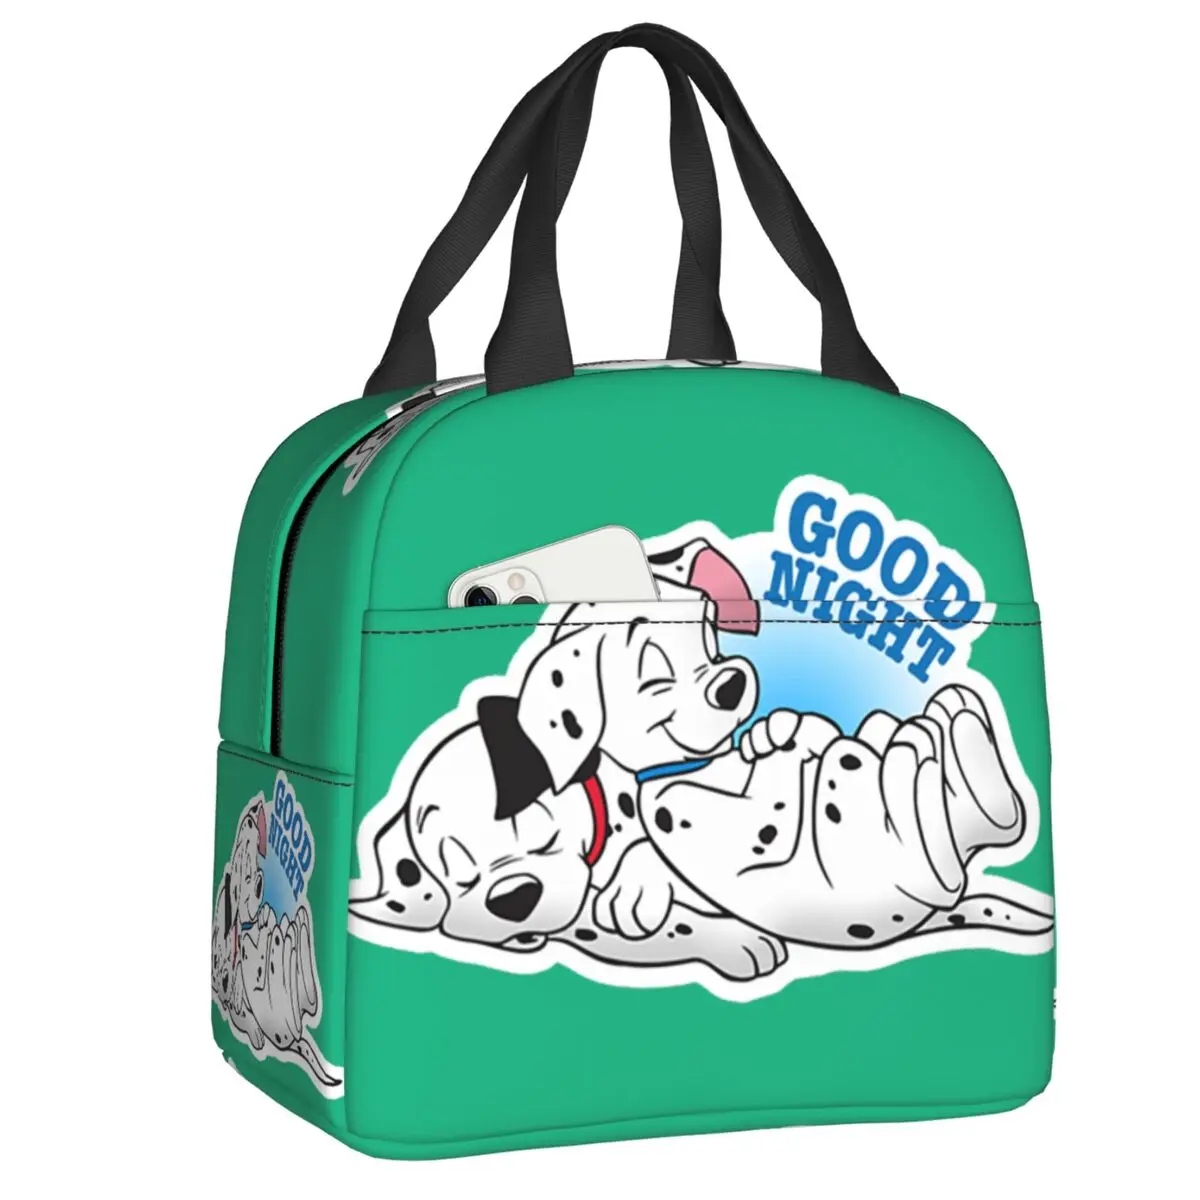 

Good Night Dalmatian Qui Dort Insulated Lunch Bags Women Cartoon Dog Portable Thermal Cooler Food Lunch Box Kids School Children